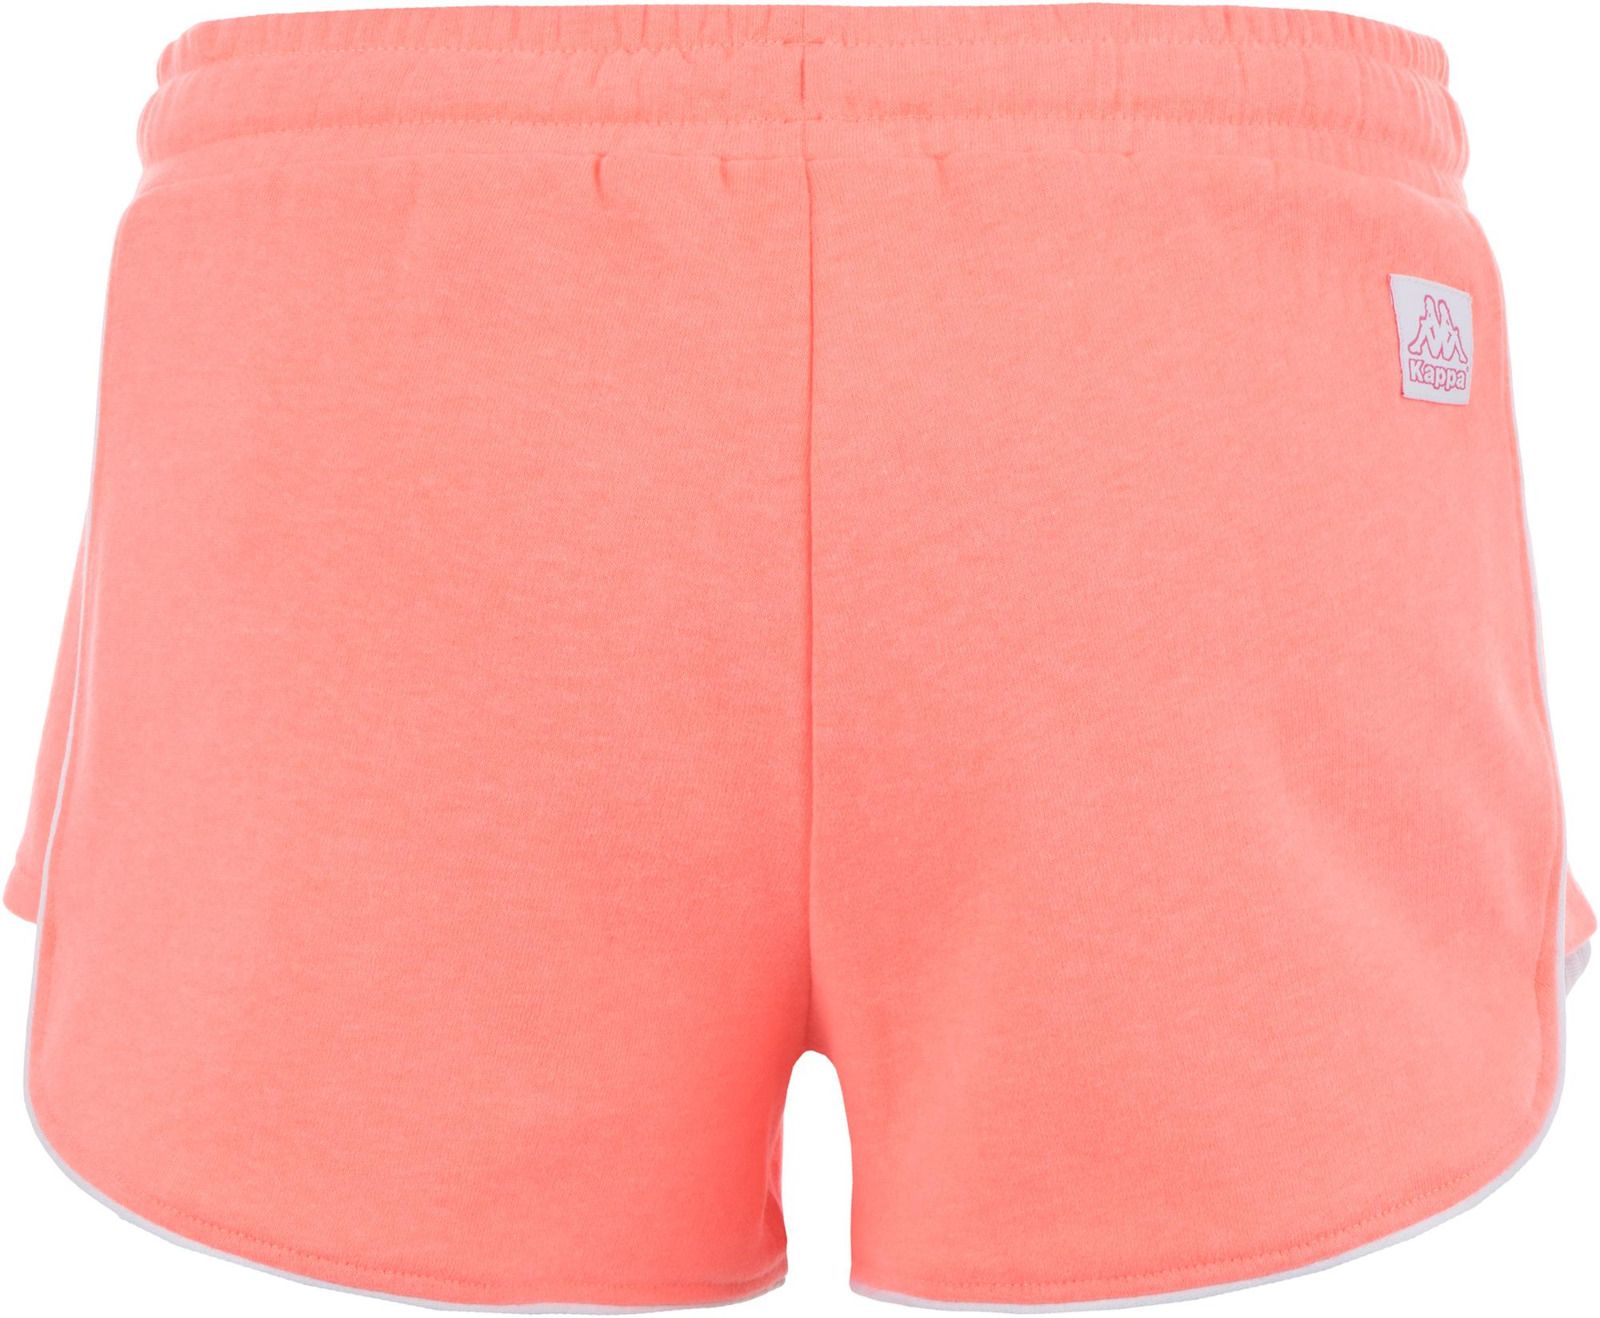   Kappa Women's Shorts, : . 304JSL0-1H.  L (48)